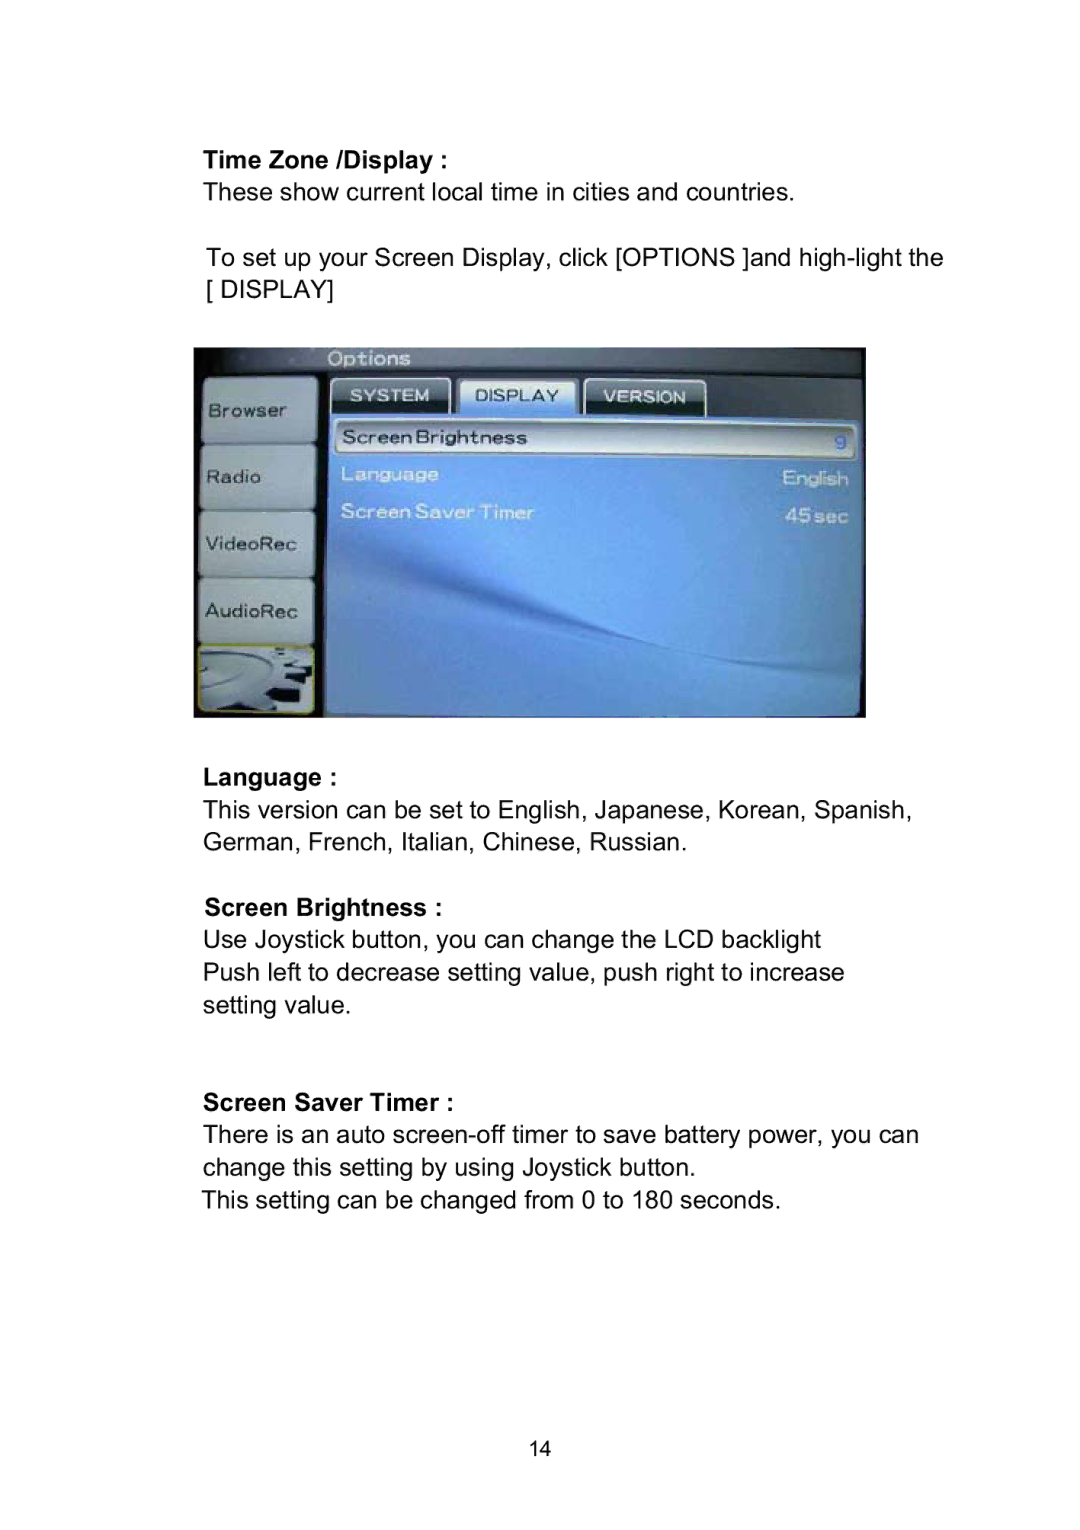 Vosonic VP8860 manual Time Zone /Display, Language, Screen Brightness, Screen Saver Timer 